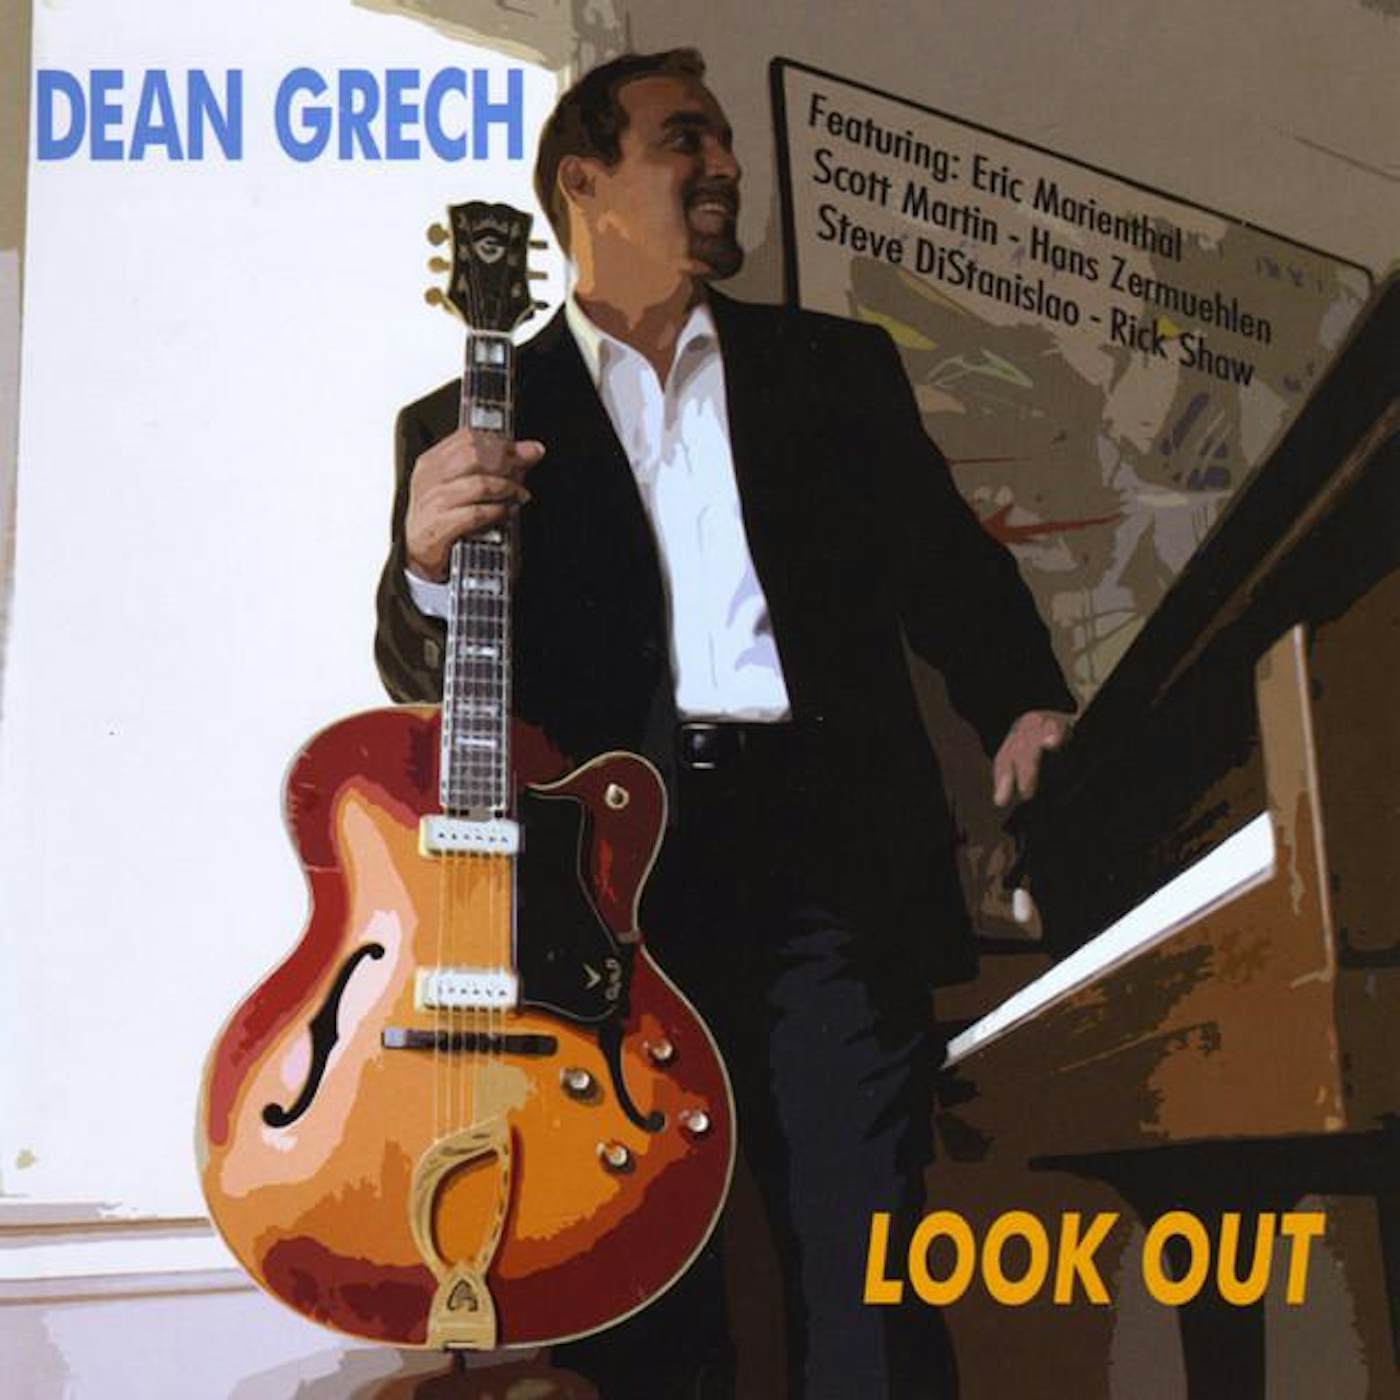 Dean Grech